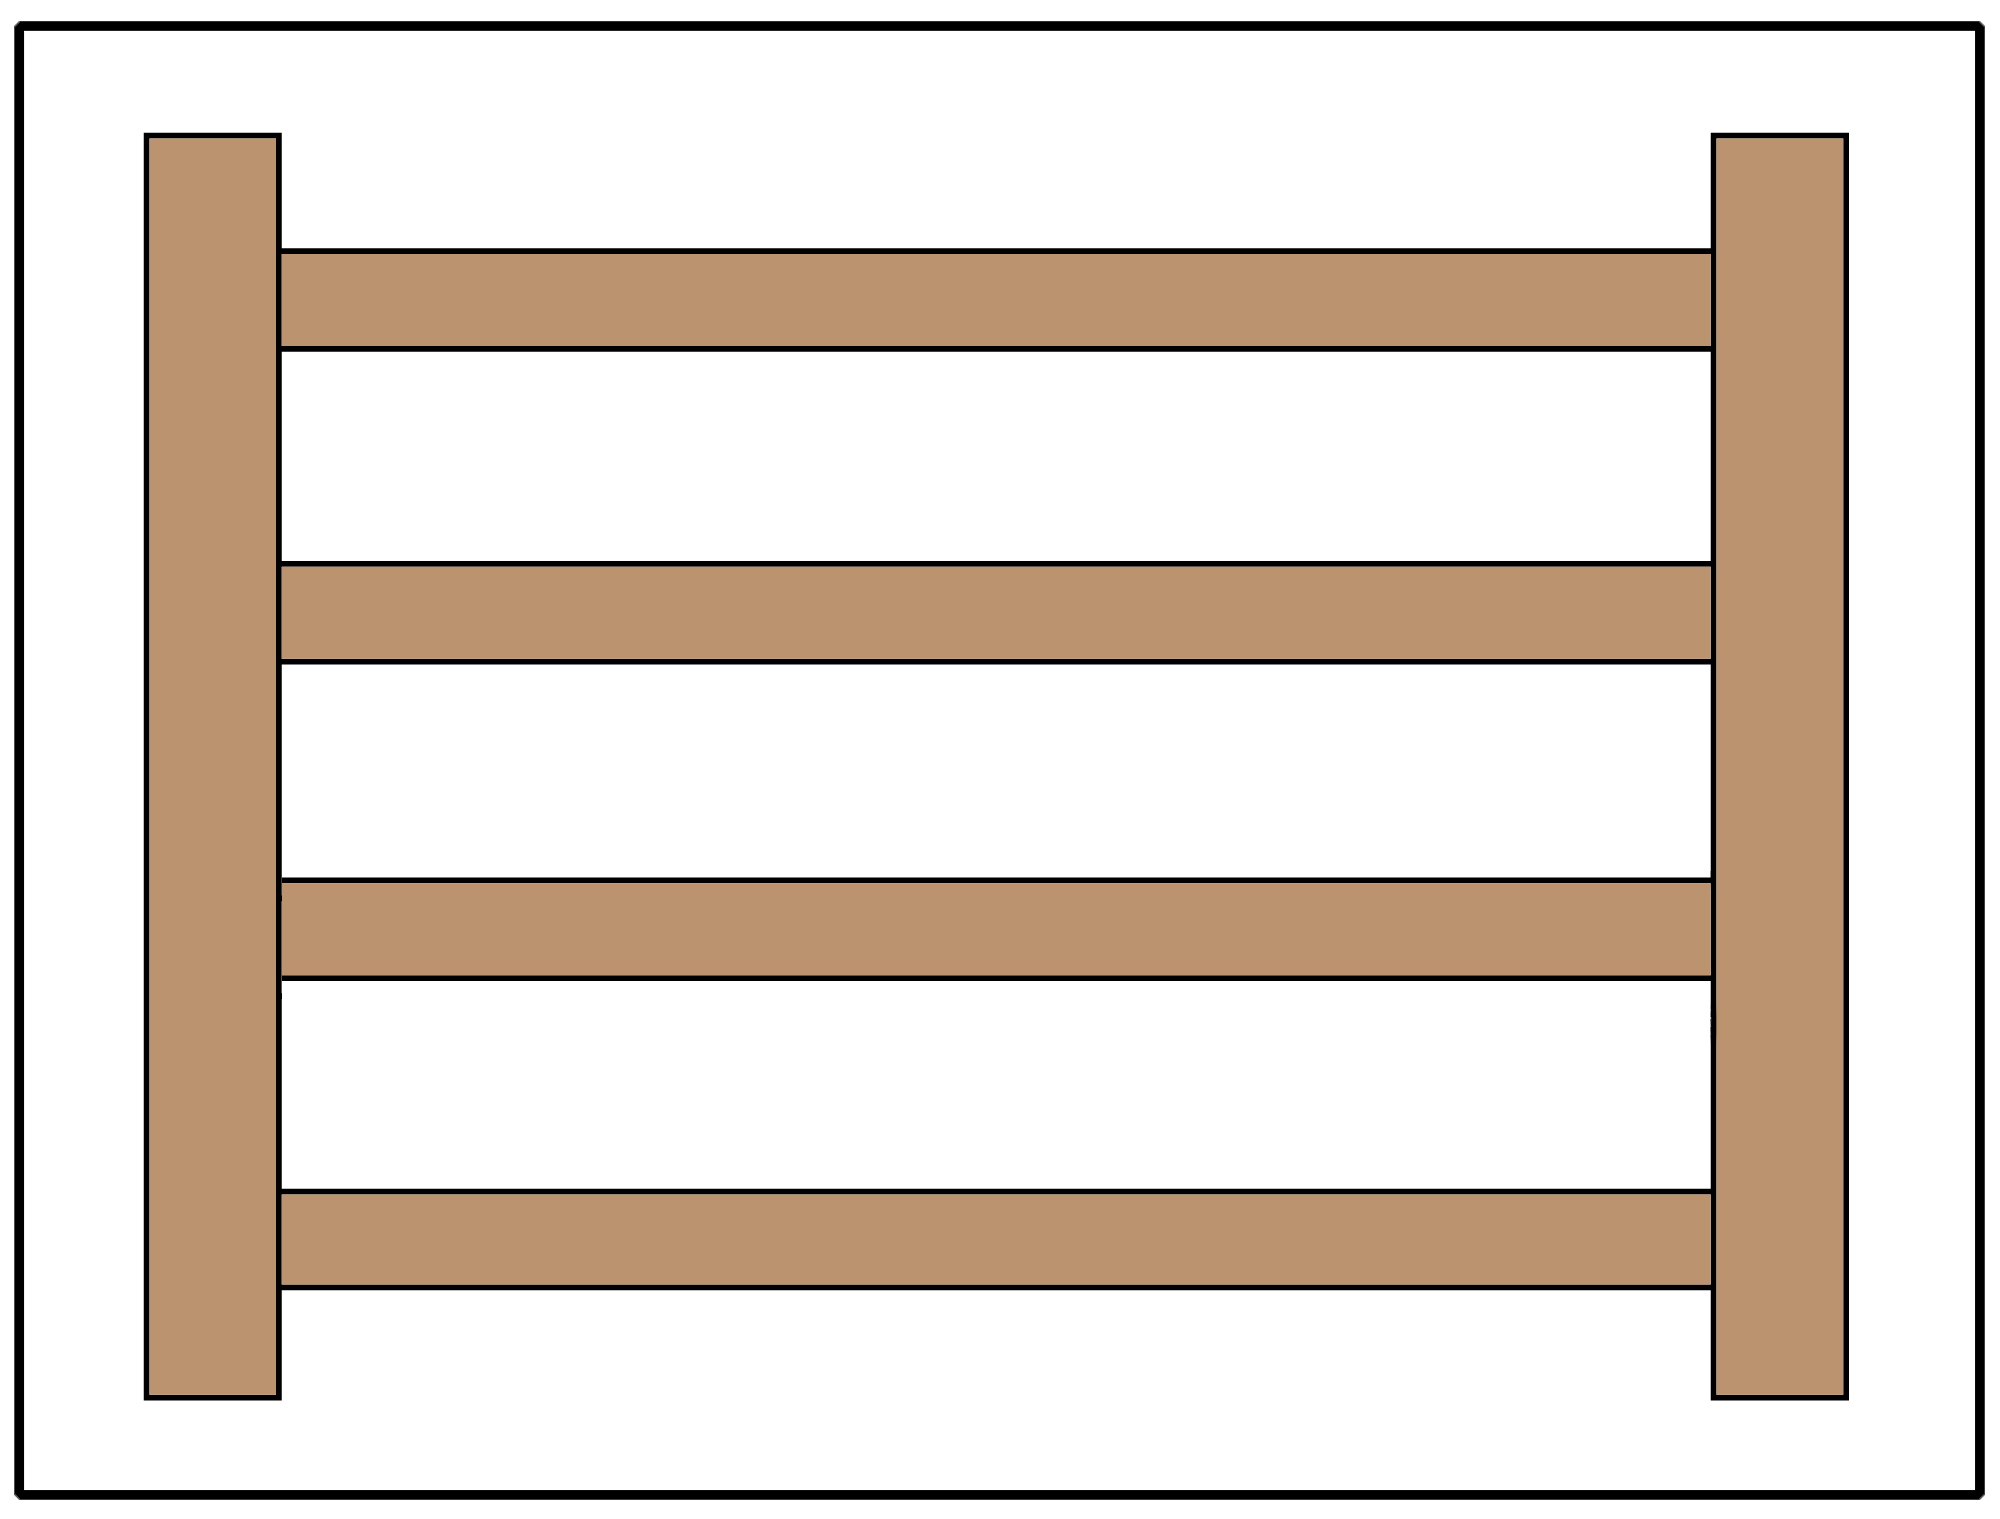 Illustration of a split rail or estate fence using 4 rails